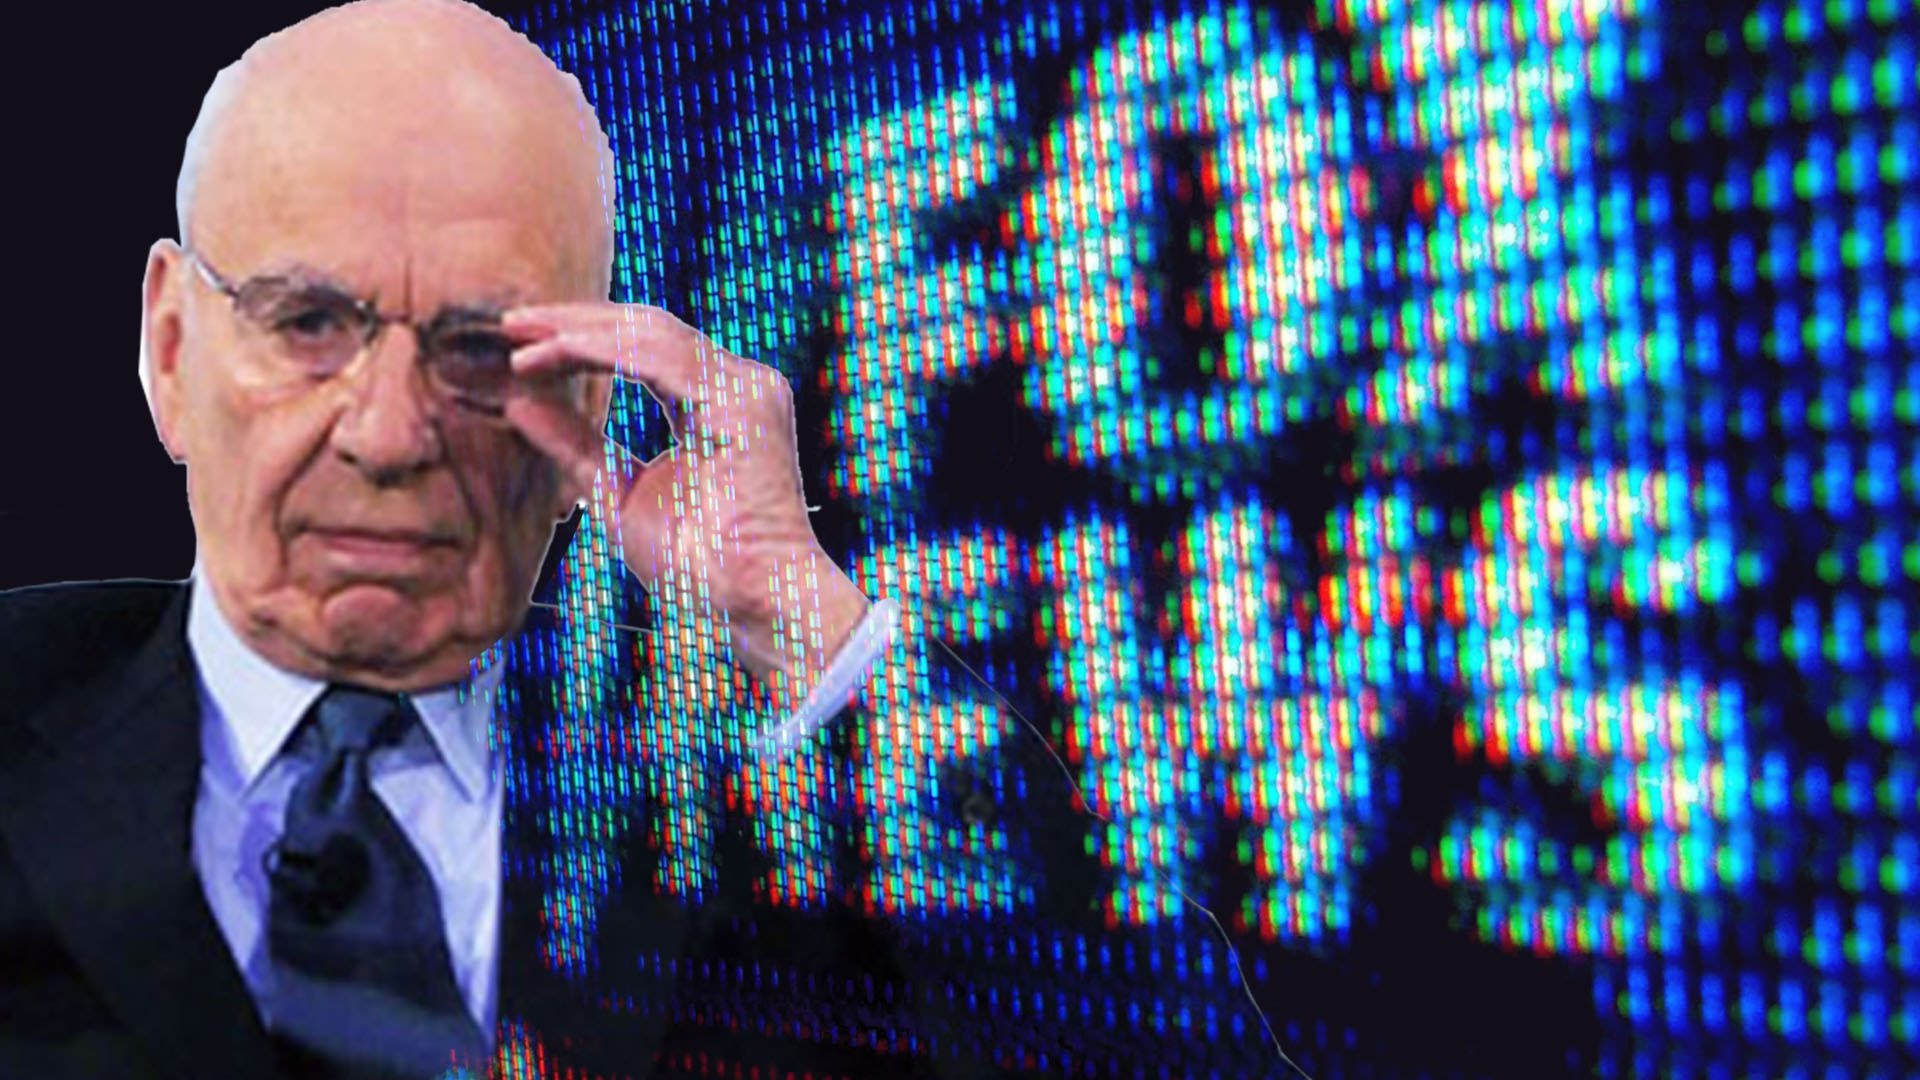 Outfoxed • Rupert Murdoch’s War on Journalism • FULL DOCUMENTARY FILM exposes Fox News